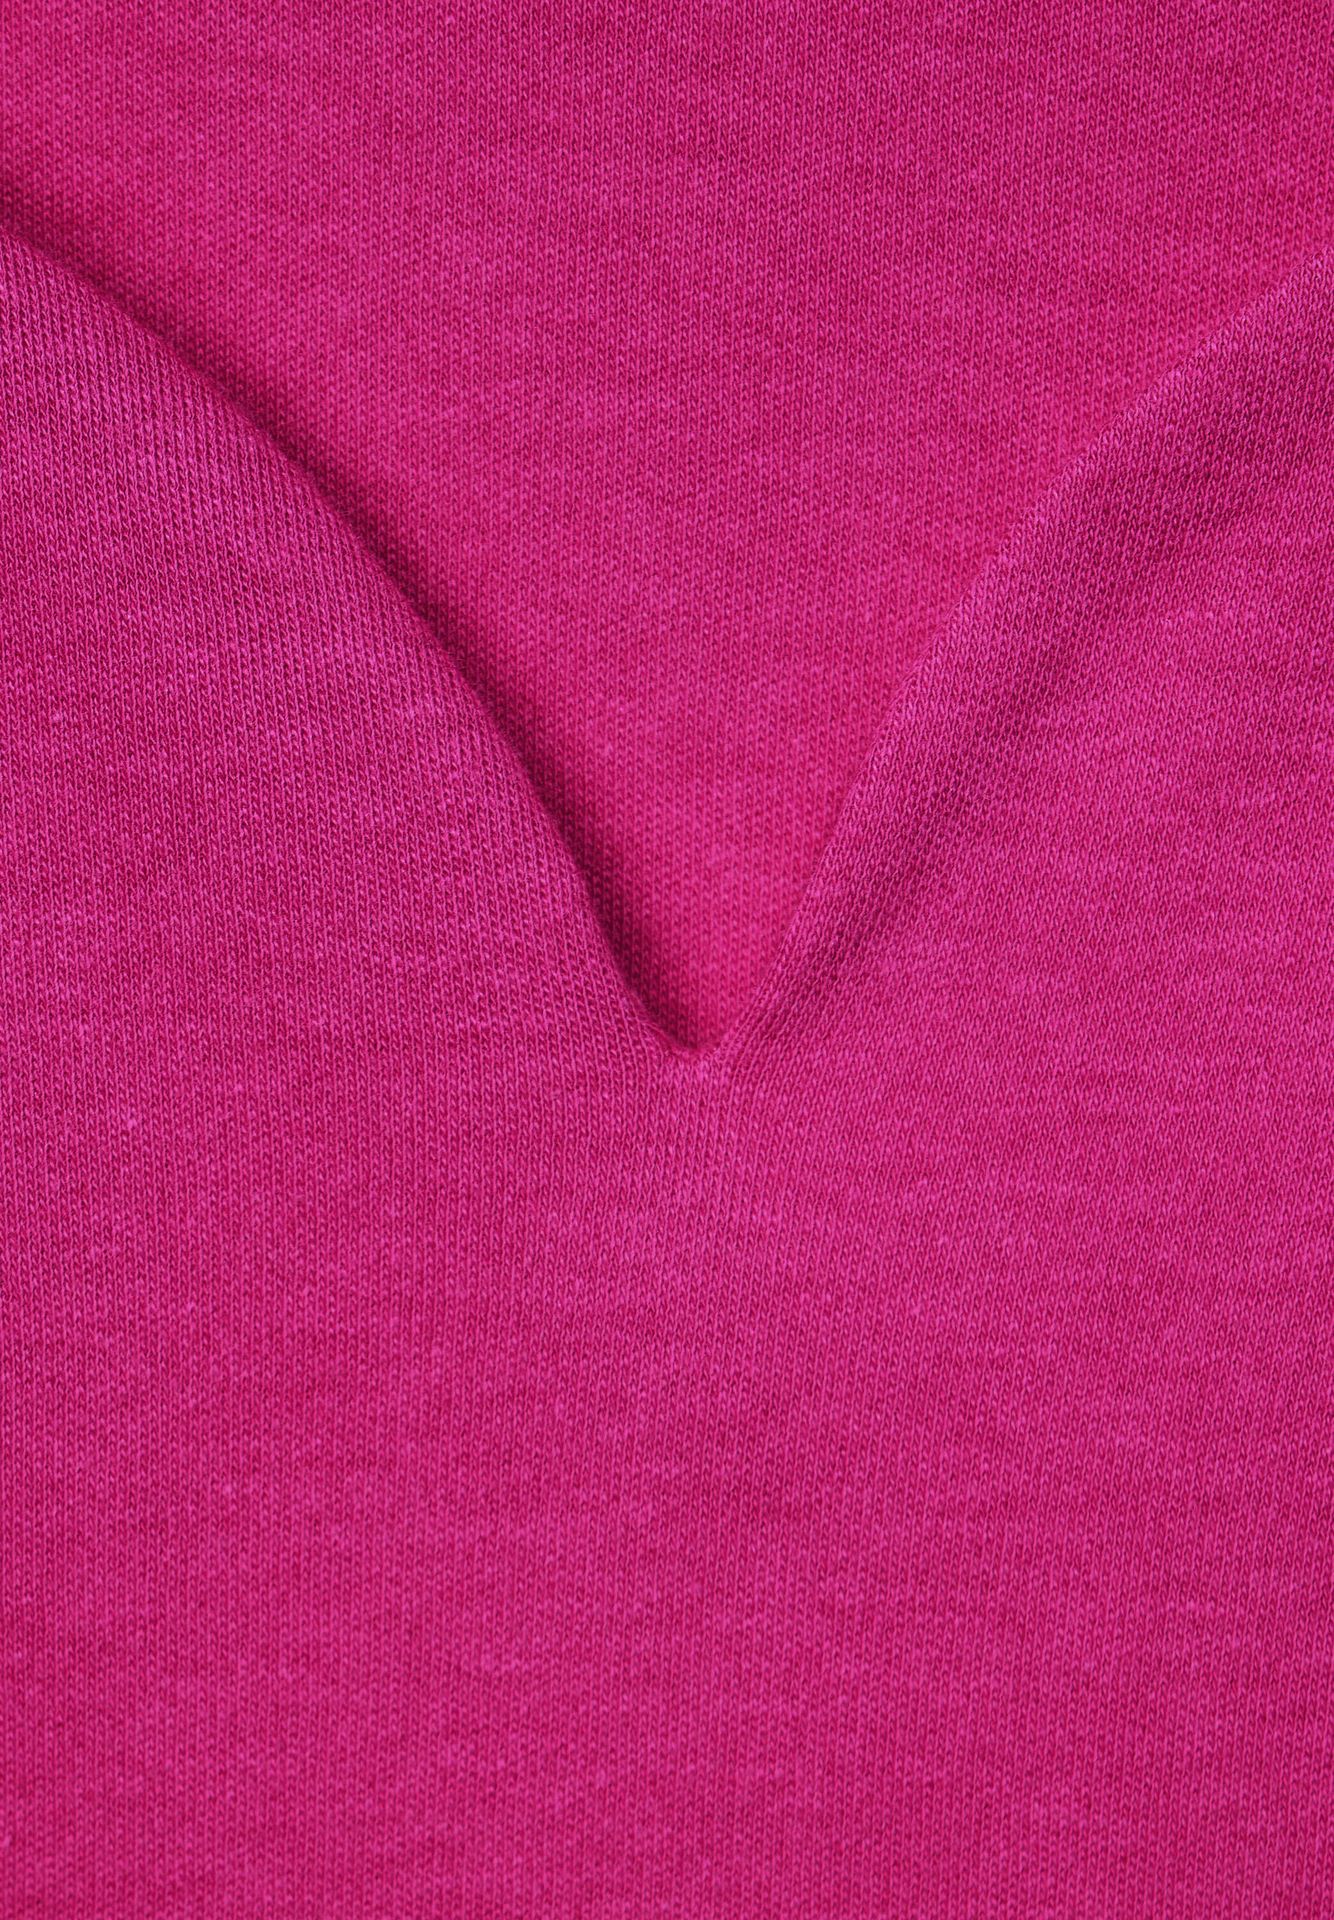 Street One A321277 QR shirt w.heart neckline s magnolia pink 00108040-EKA19000200000448